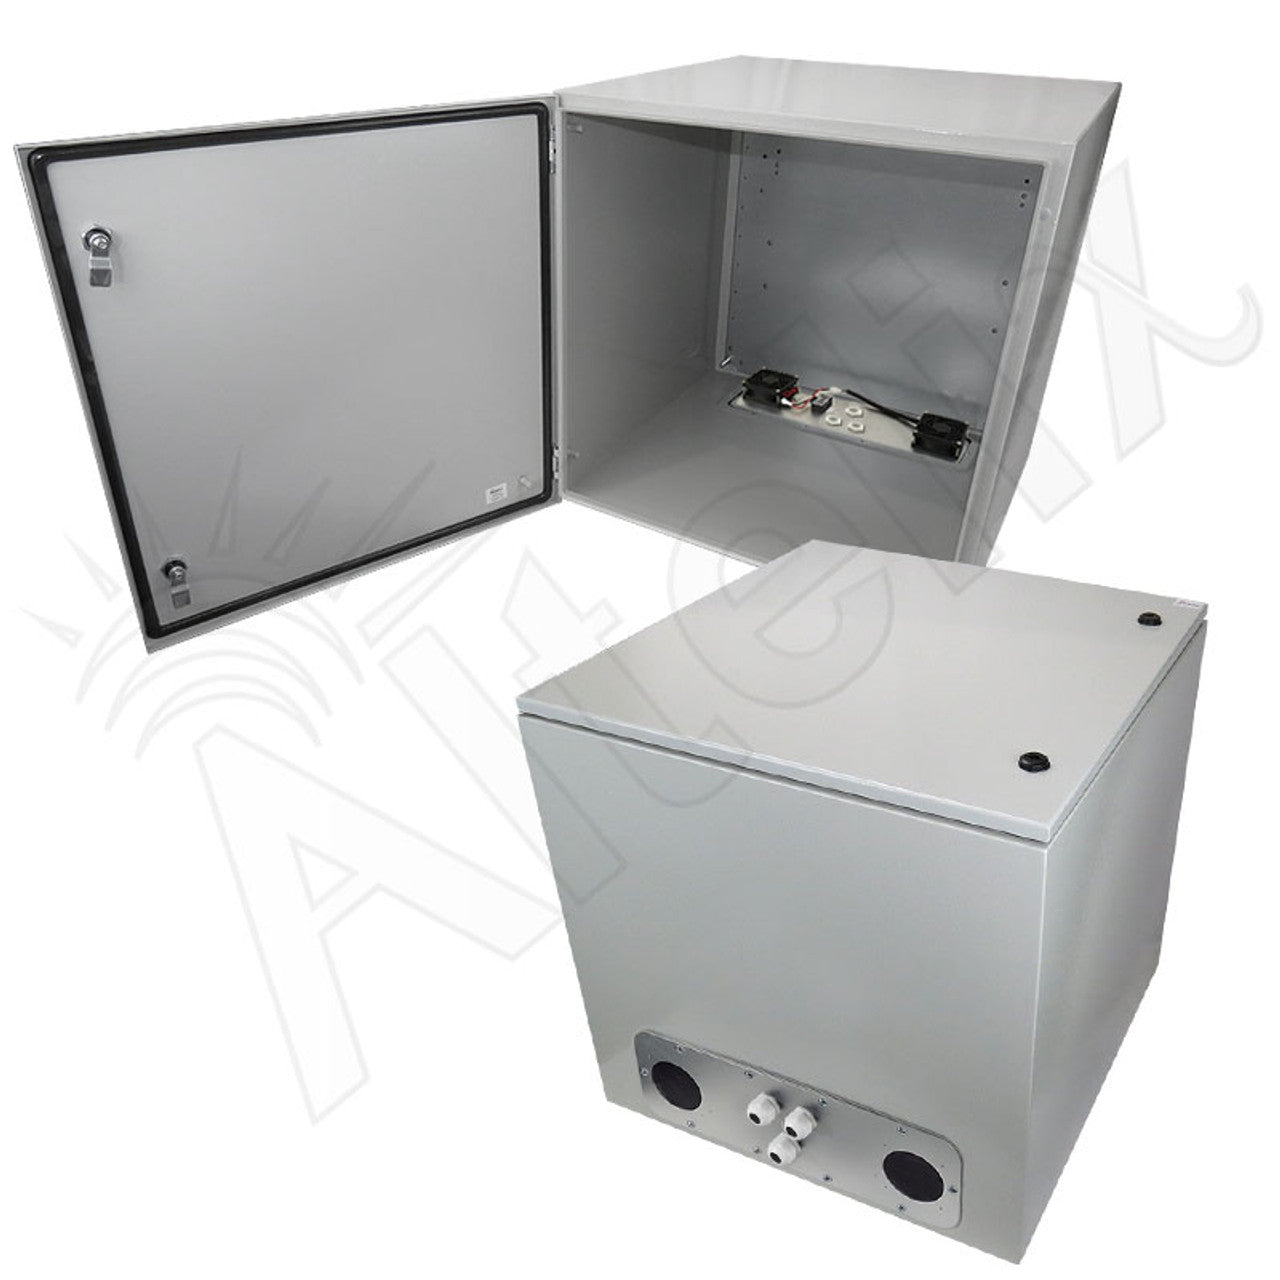 Altelix Steel Weatherproof NEMA Enclosure with Dual 12 VDC Cooling Fans